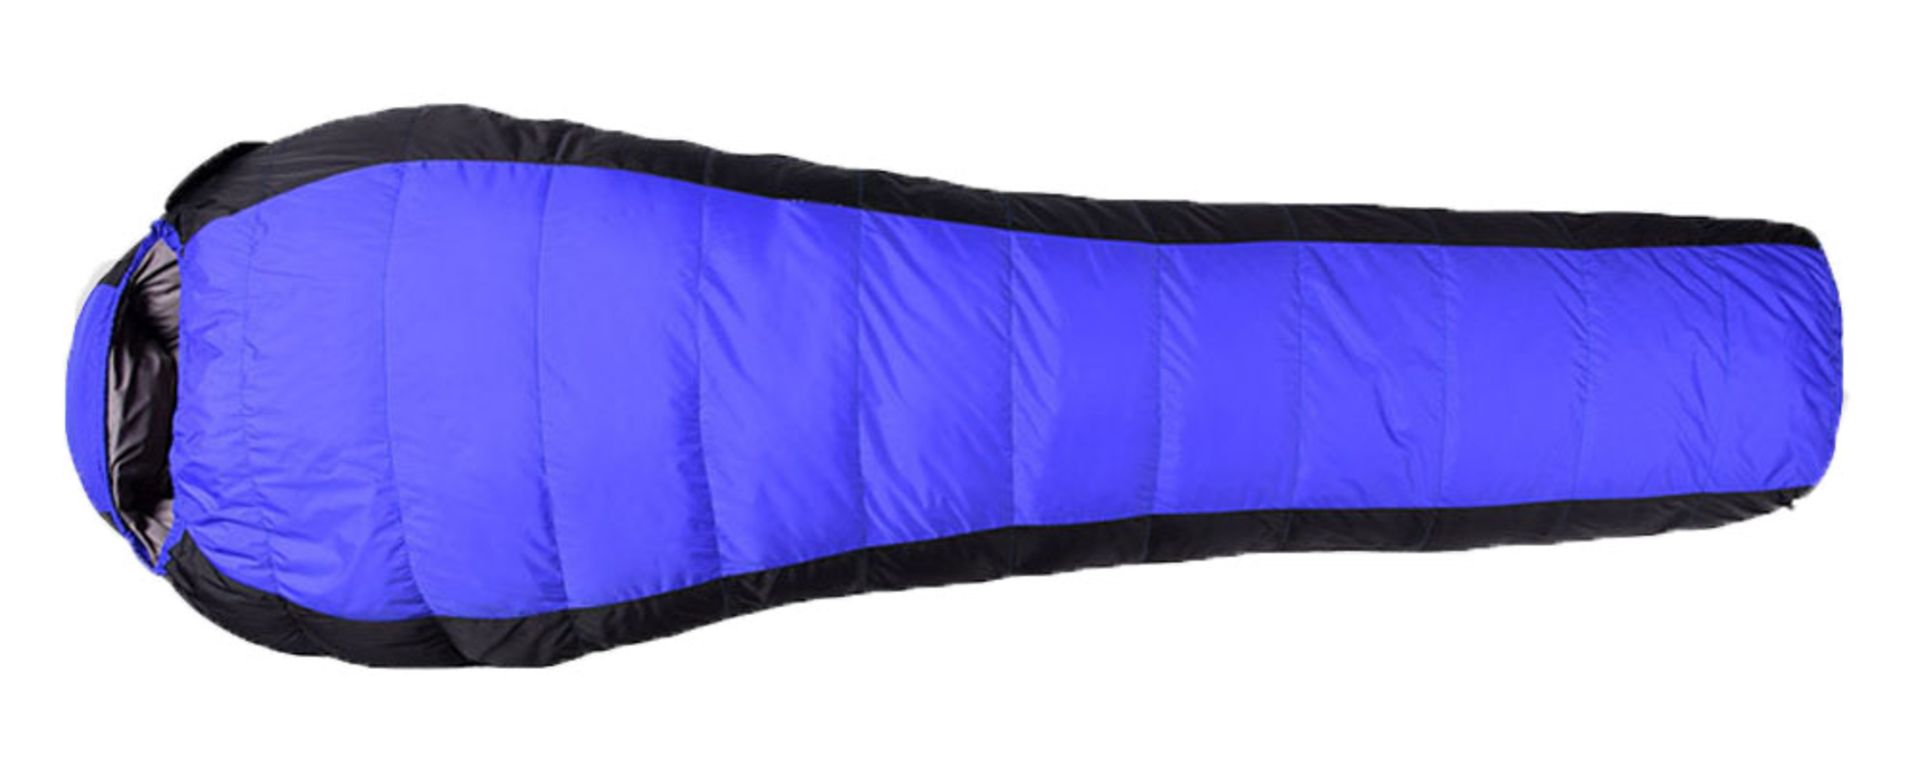 UNITS - RBSM COUPLE MUMMY STYLE SLEEPING BAG (NEW) (MSRP $100) - Image 3 of 5